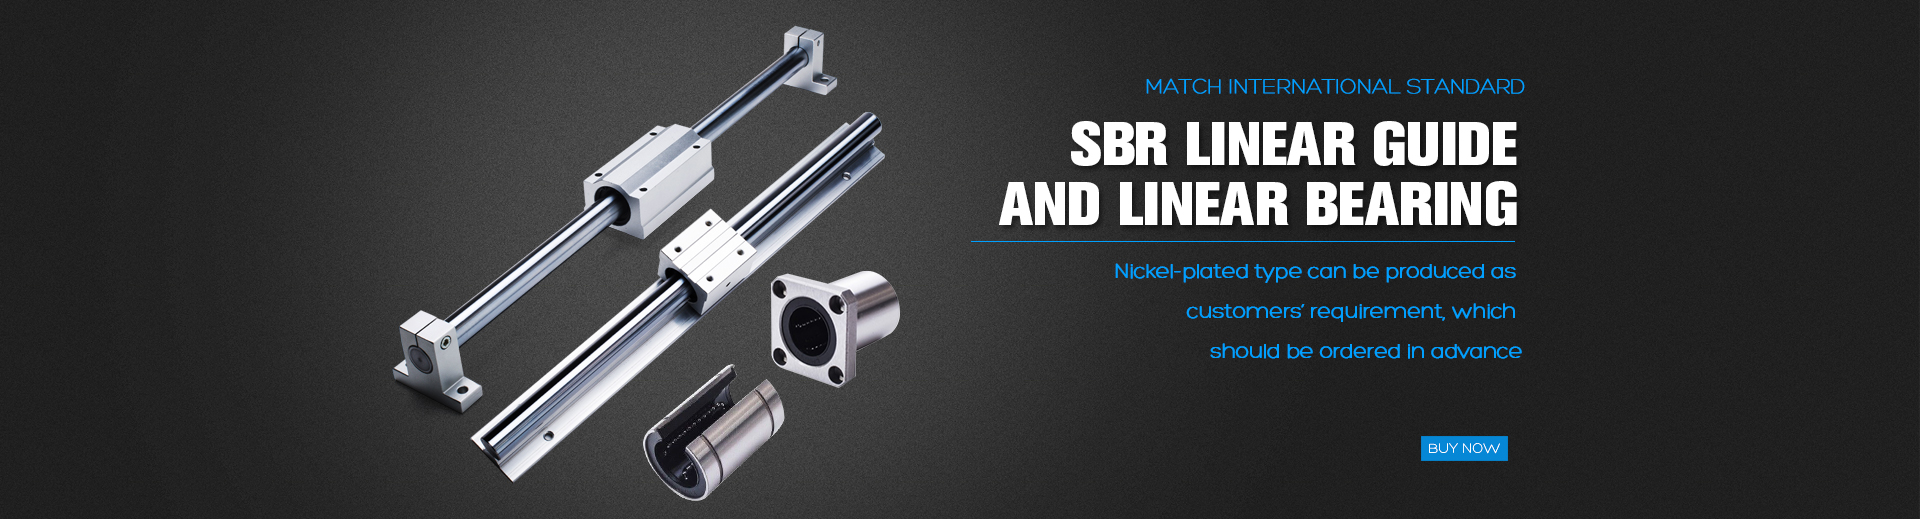 Linear Bearing and SBR rails